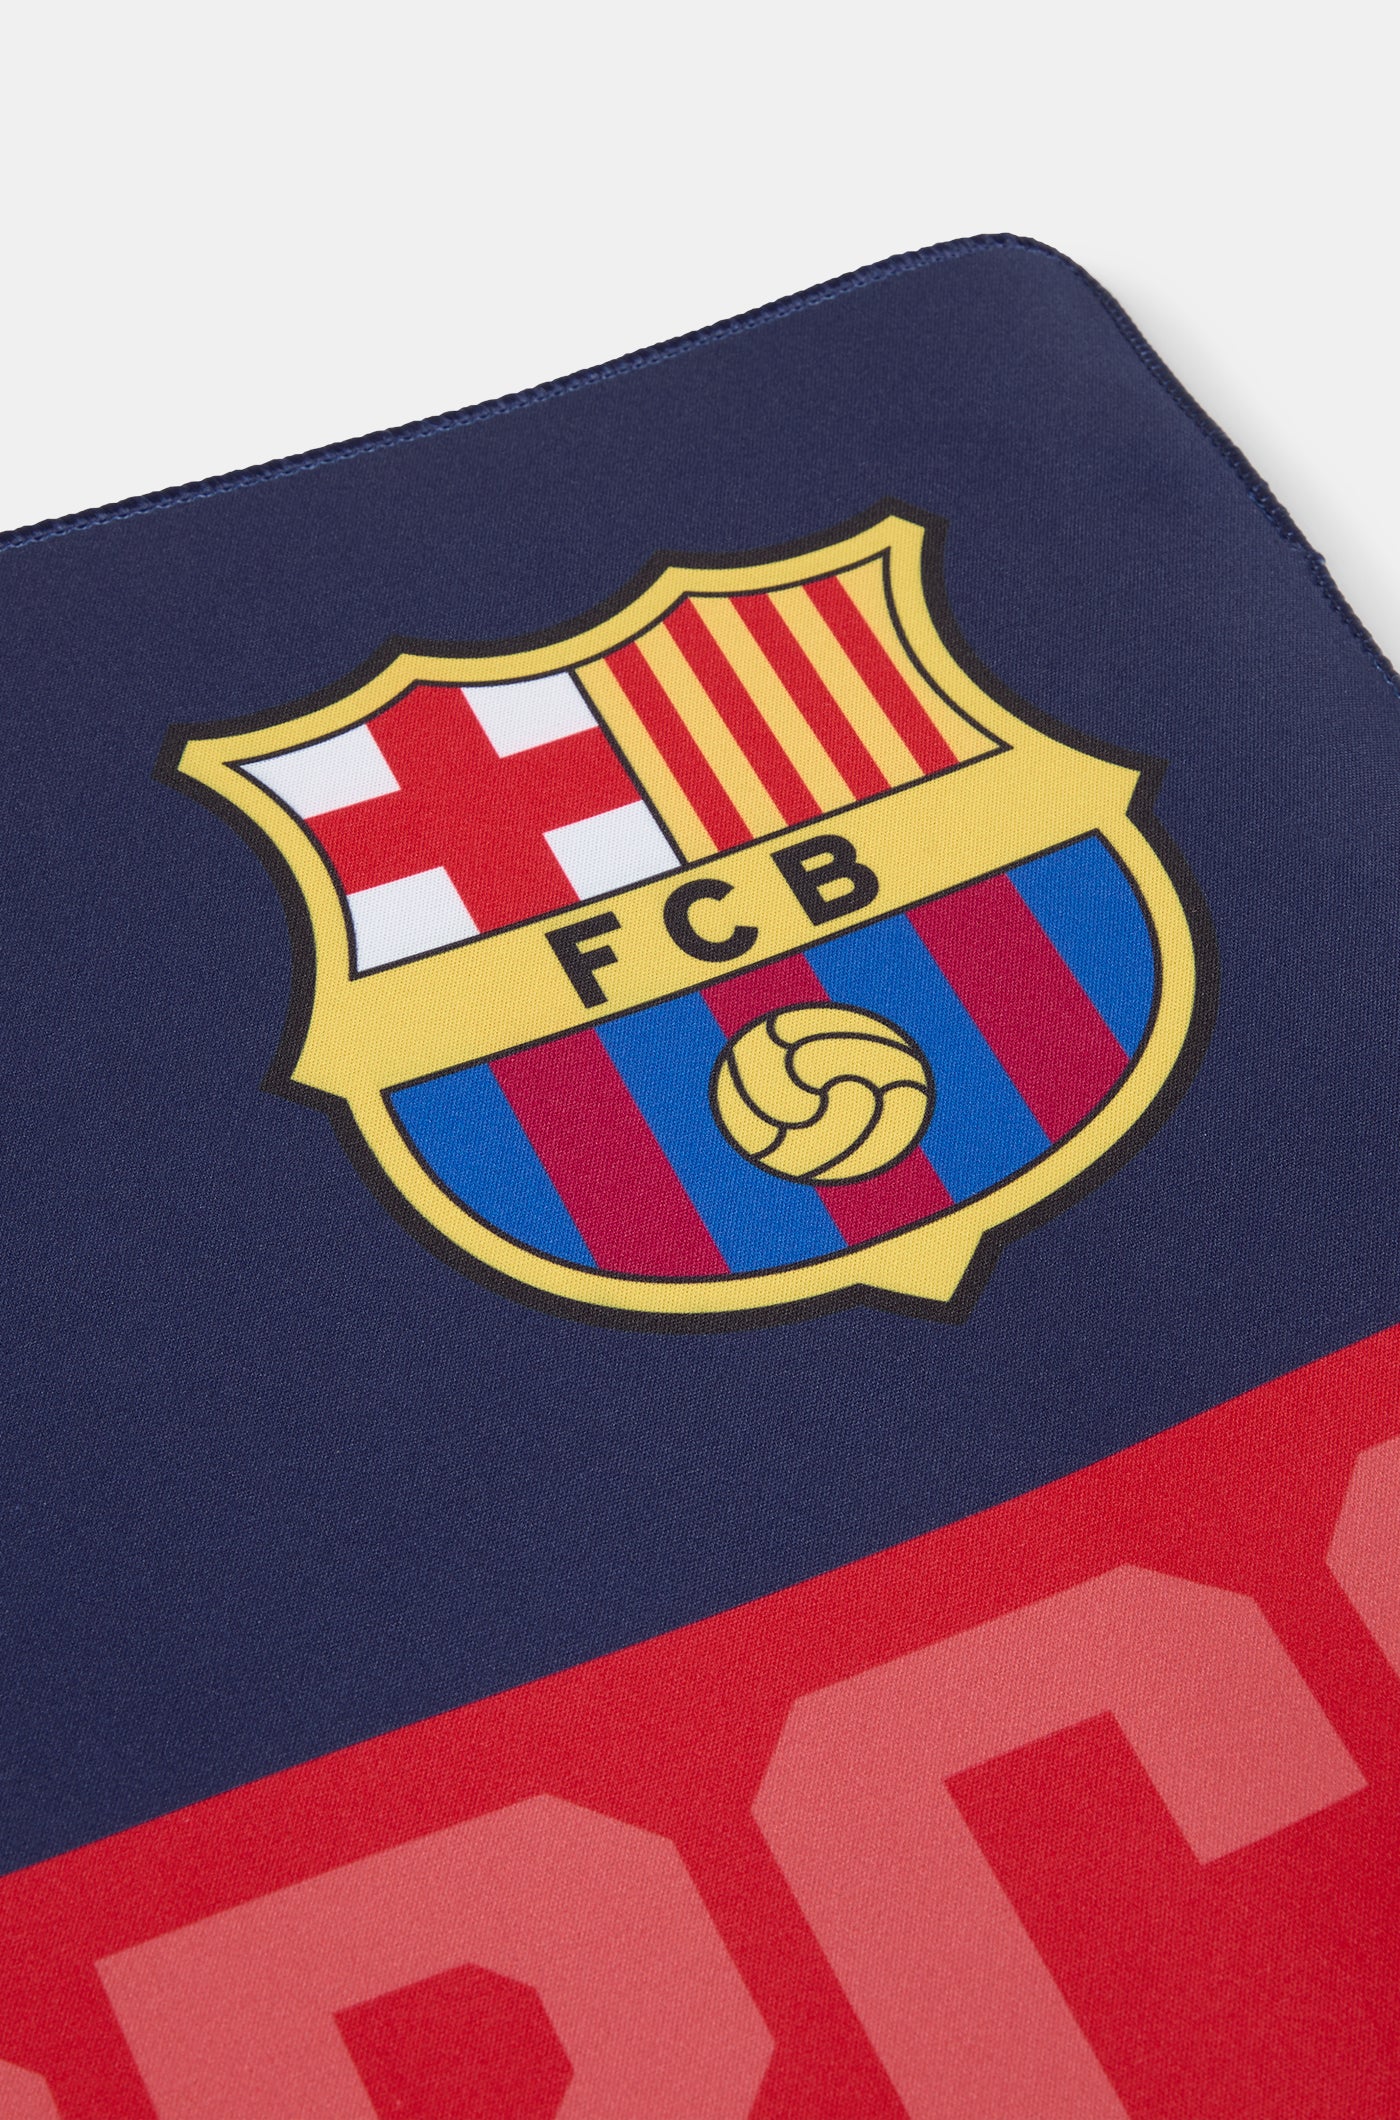 Maus-Pad XL FC Barcelona